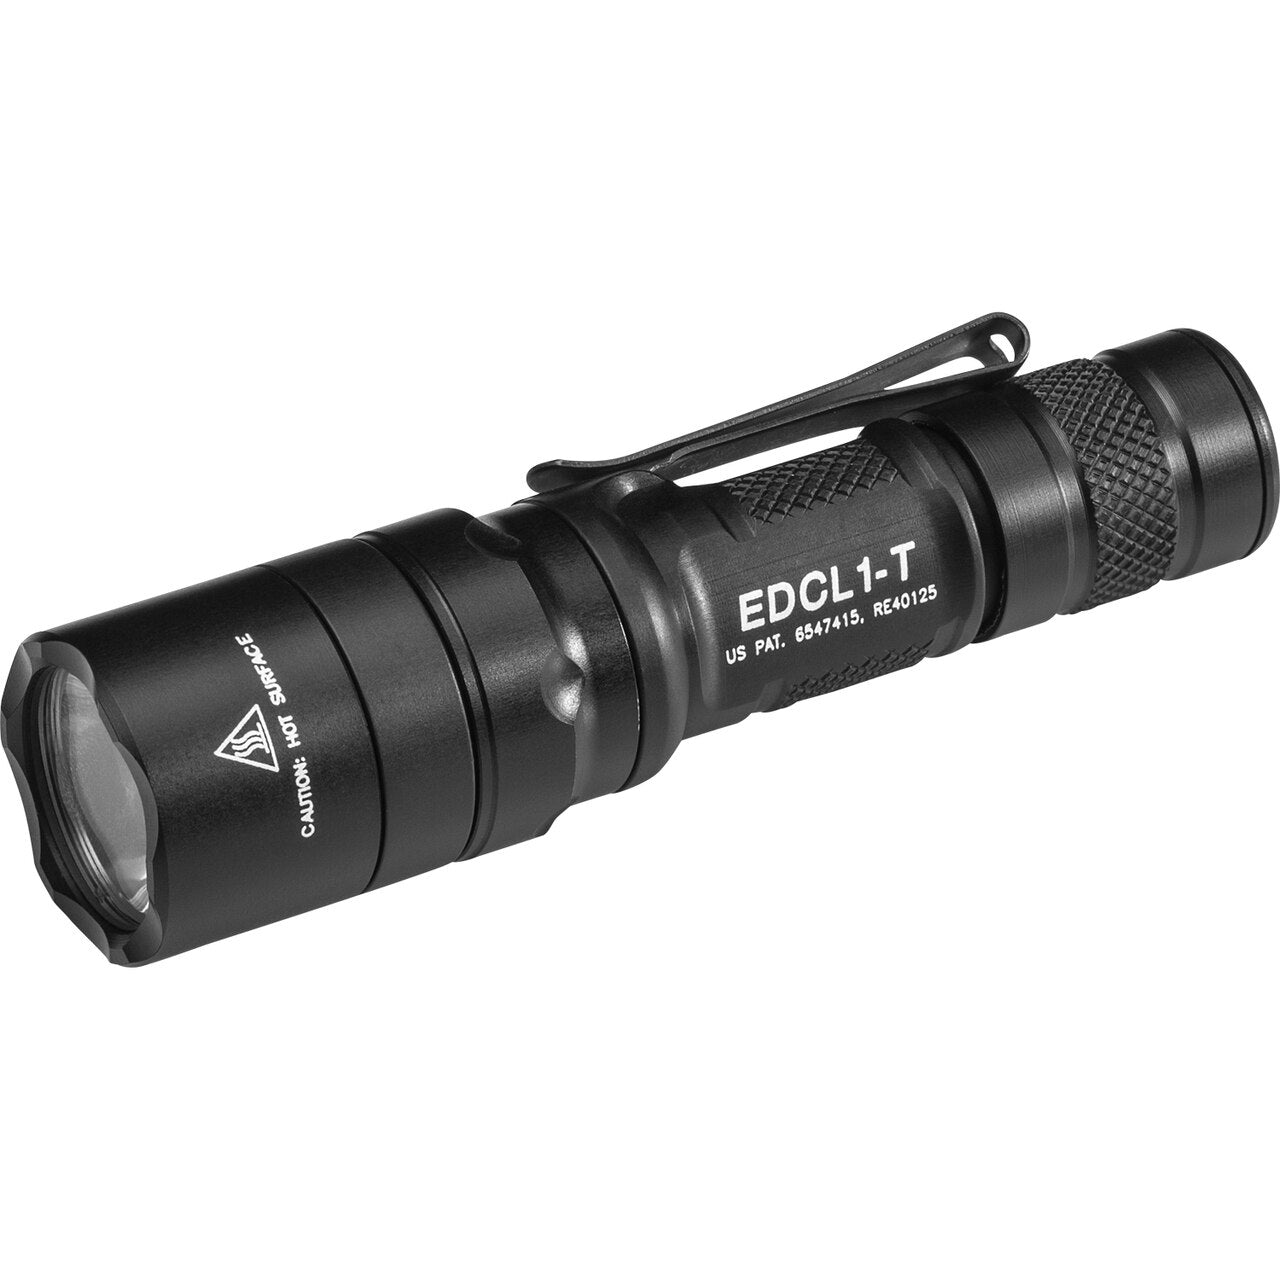 Surefire EDCL1-T Dual-Output Everyday Carry 500 Lumen LED Flashlight